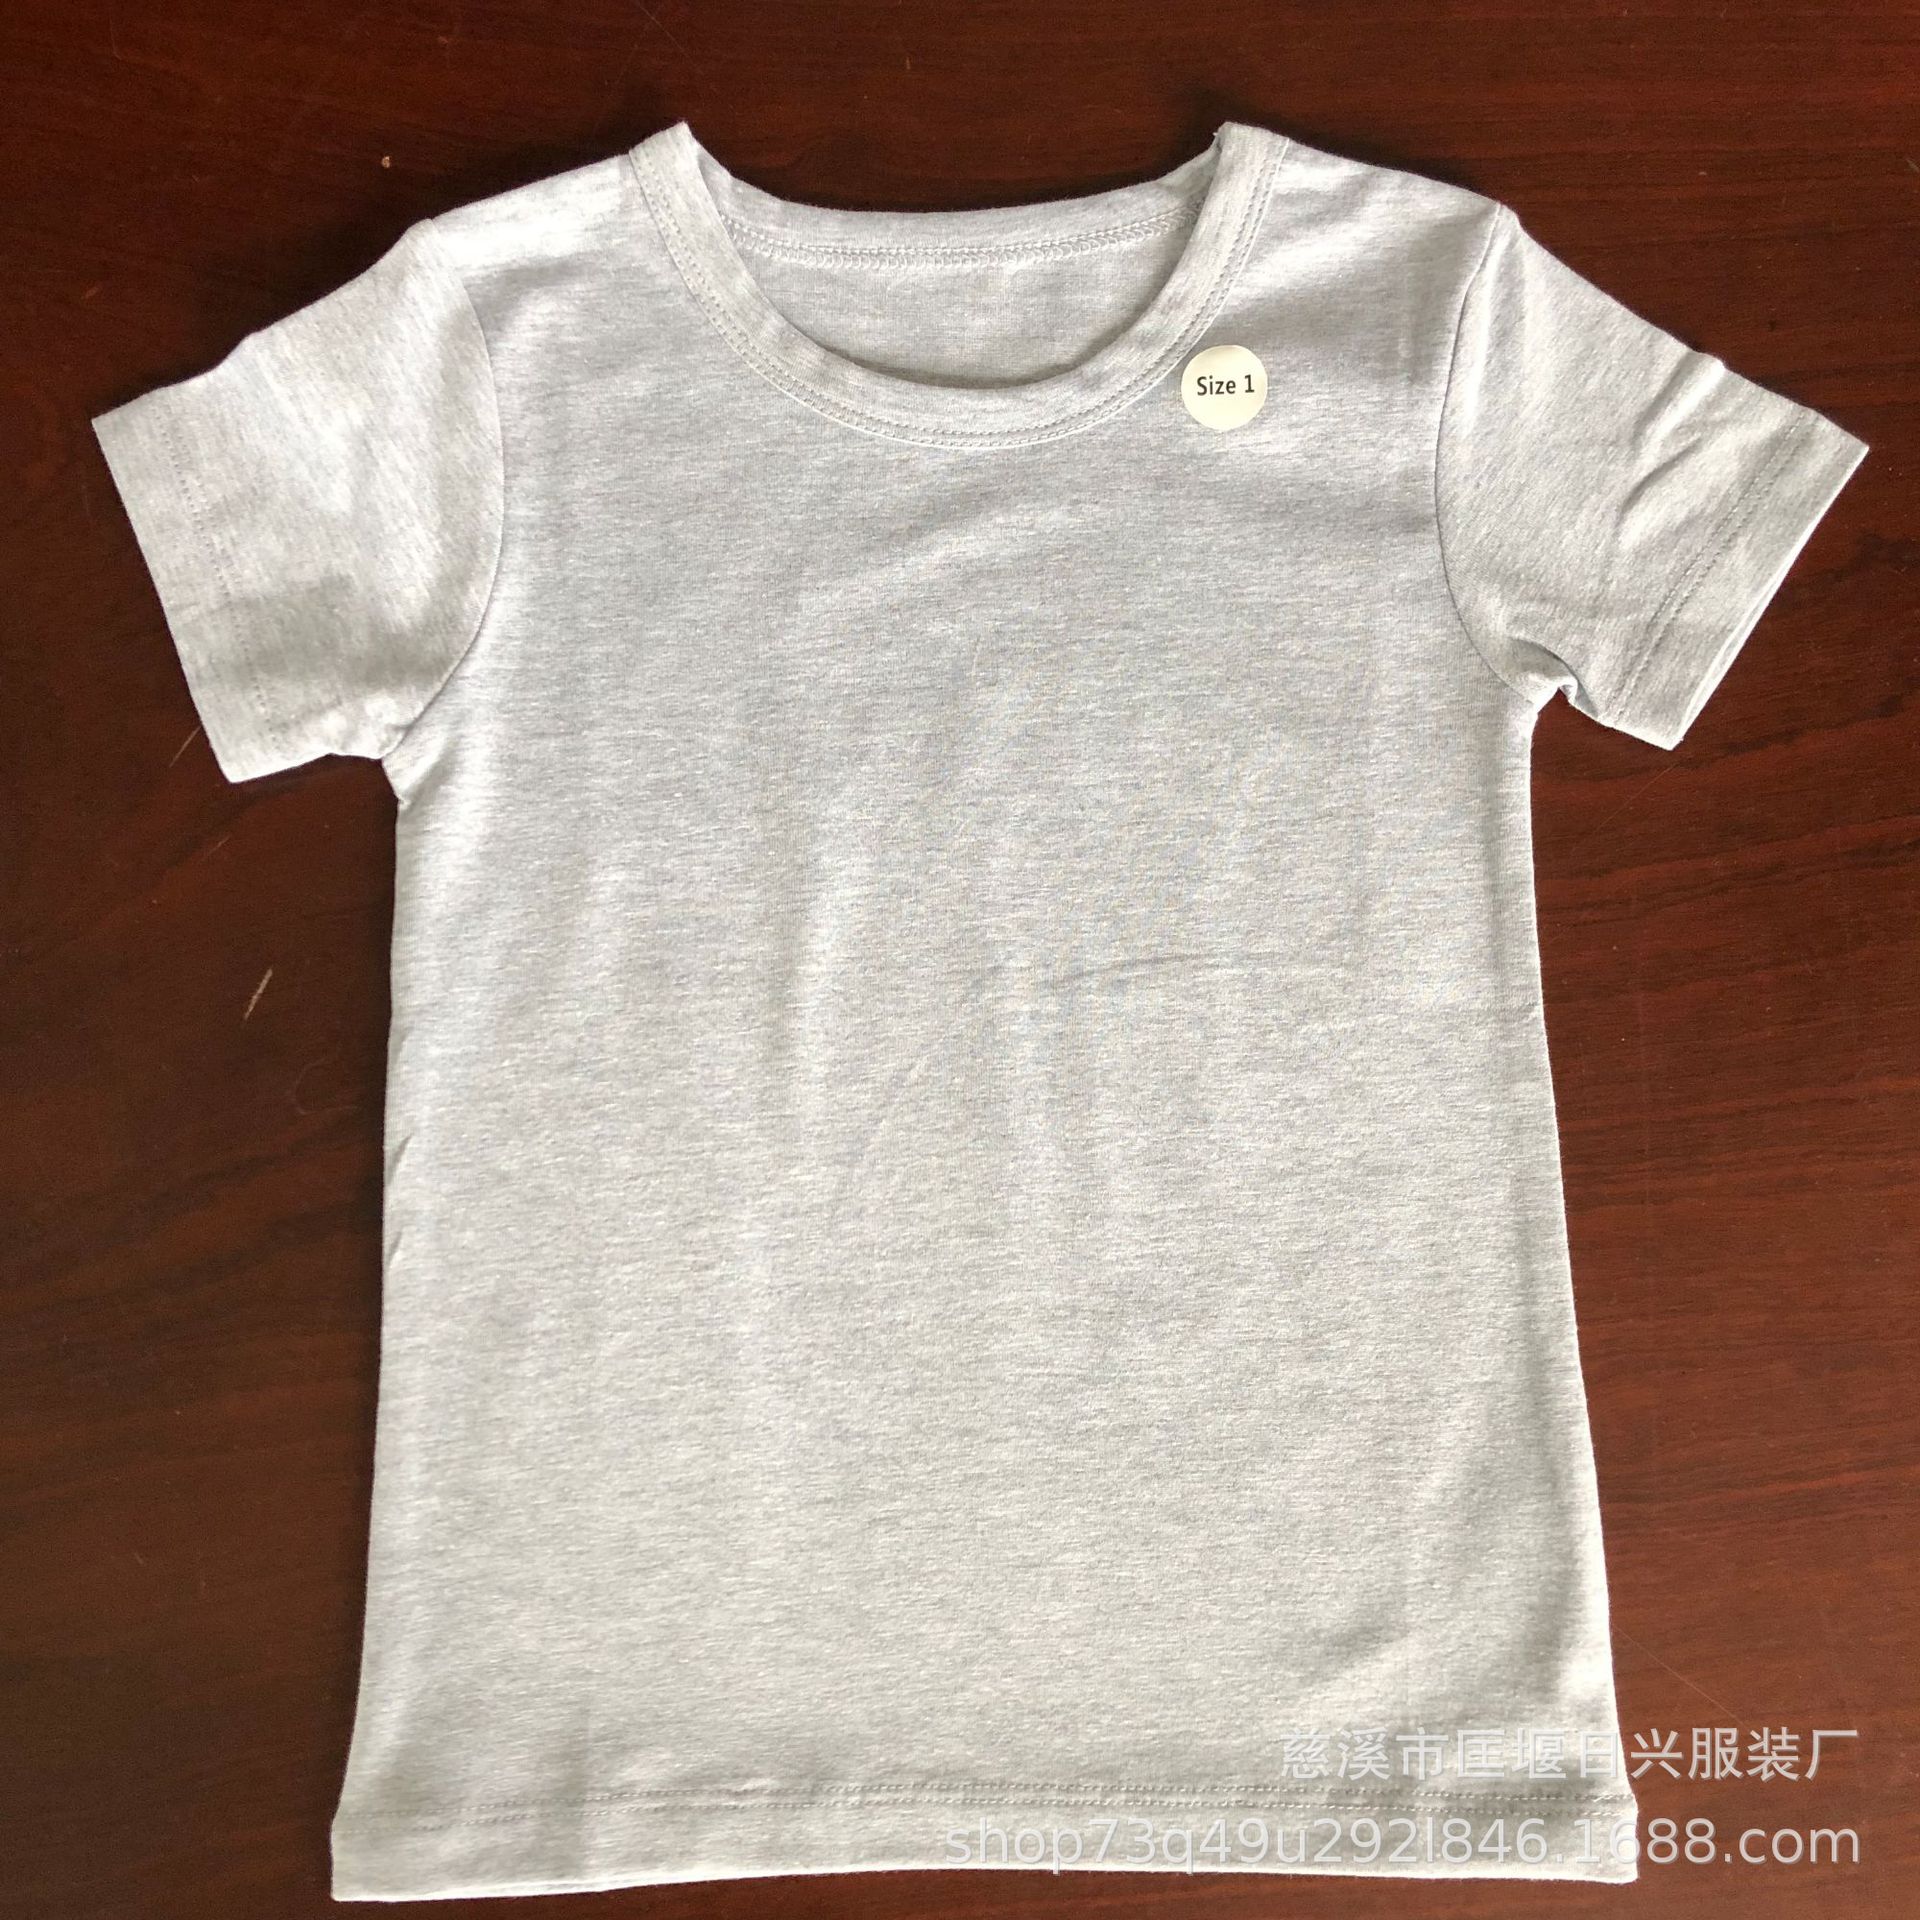 180g儿童精梳棉纯色圆领短袖T恤来图定制亲子装中小学校服班服